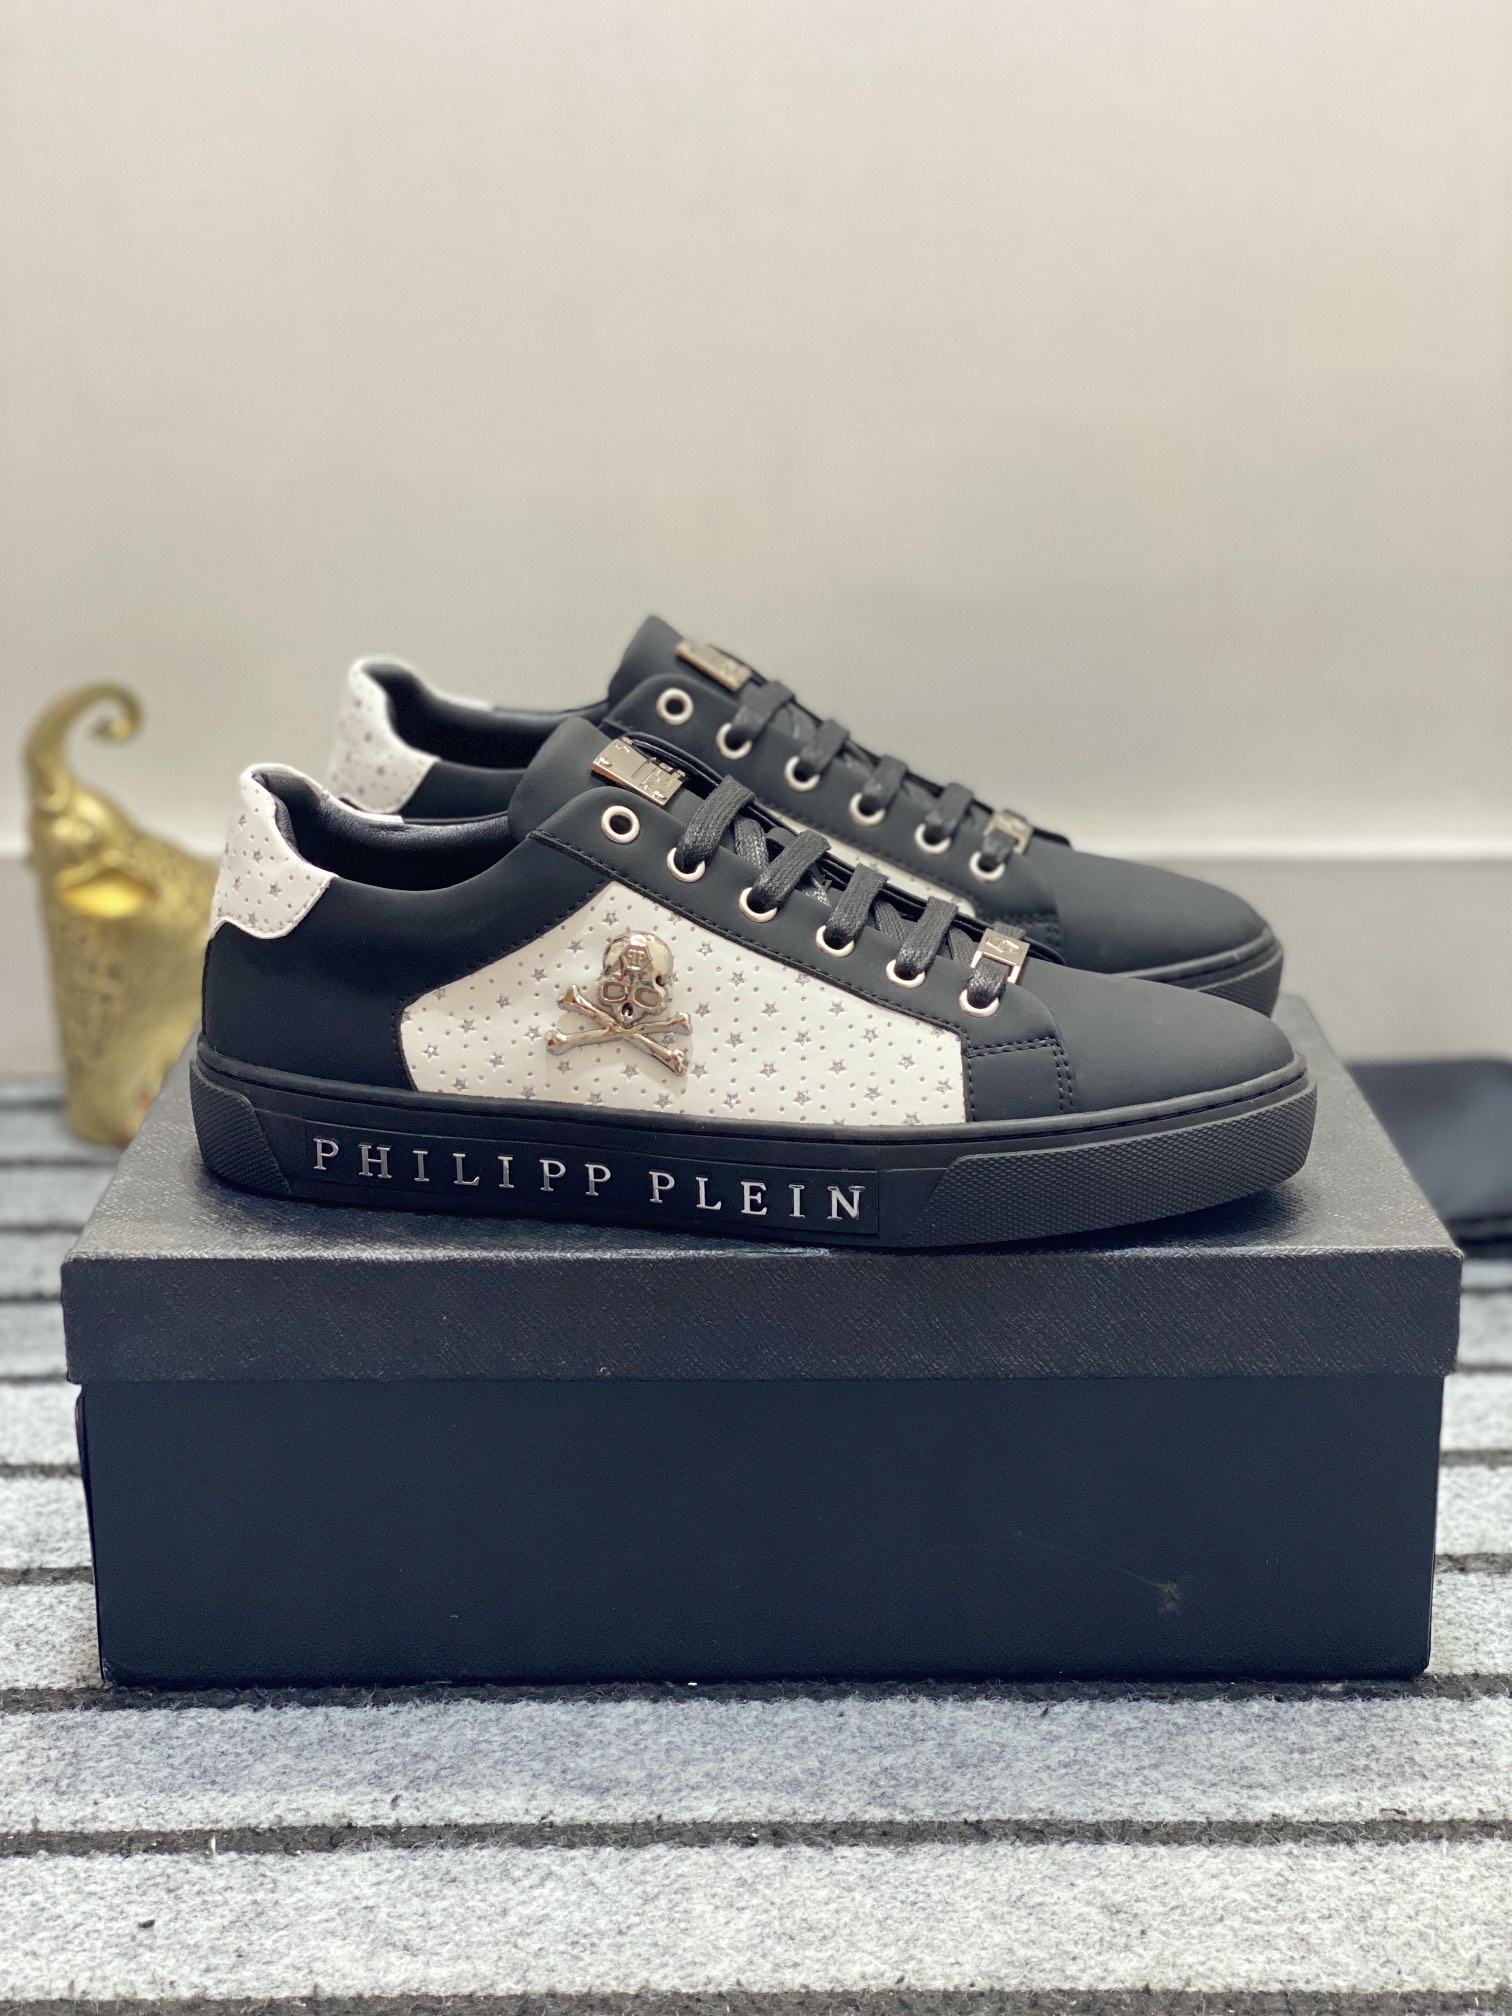 PHILIPP PLEIN-PHILIPP PLEIN 1720220 Size: 38-44 (45 customized JH) ◾️▫️Plein️ Trendy men's series of